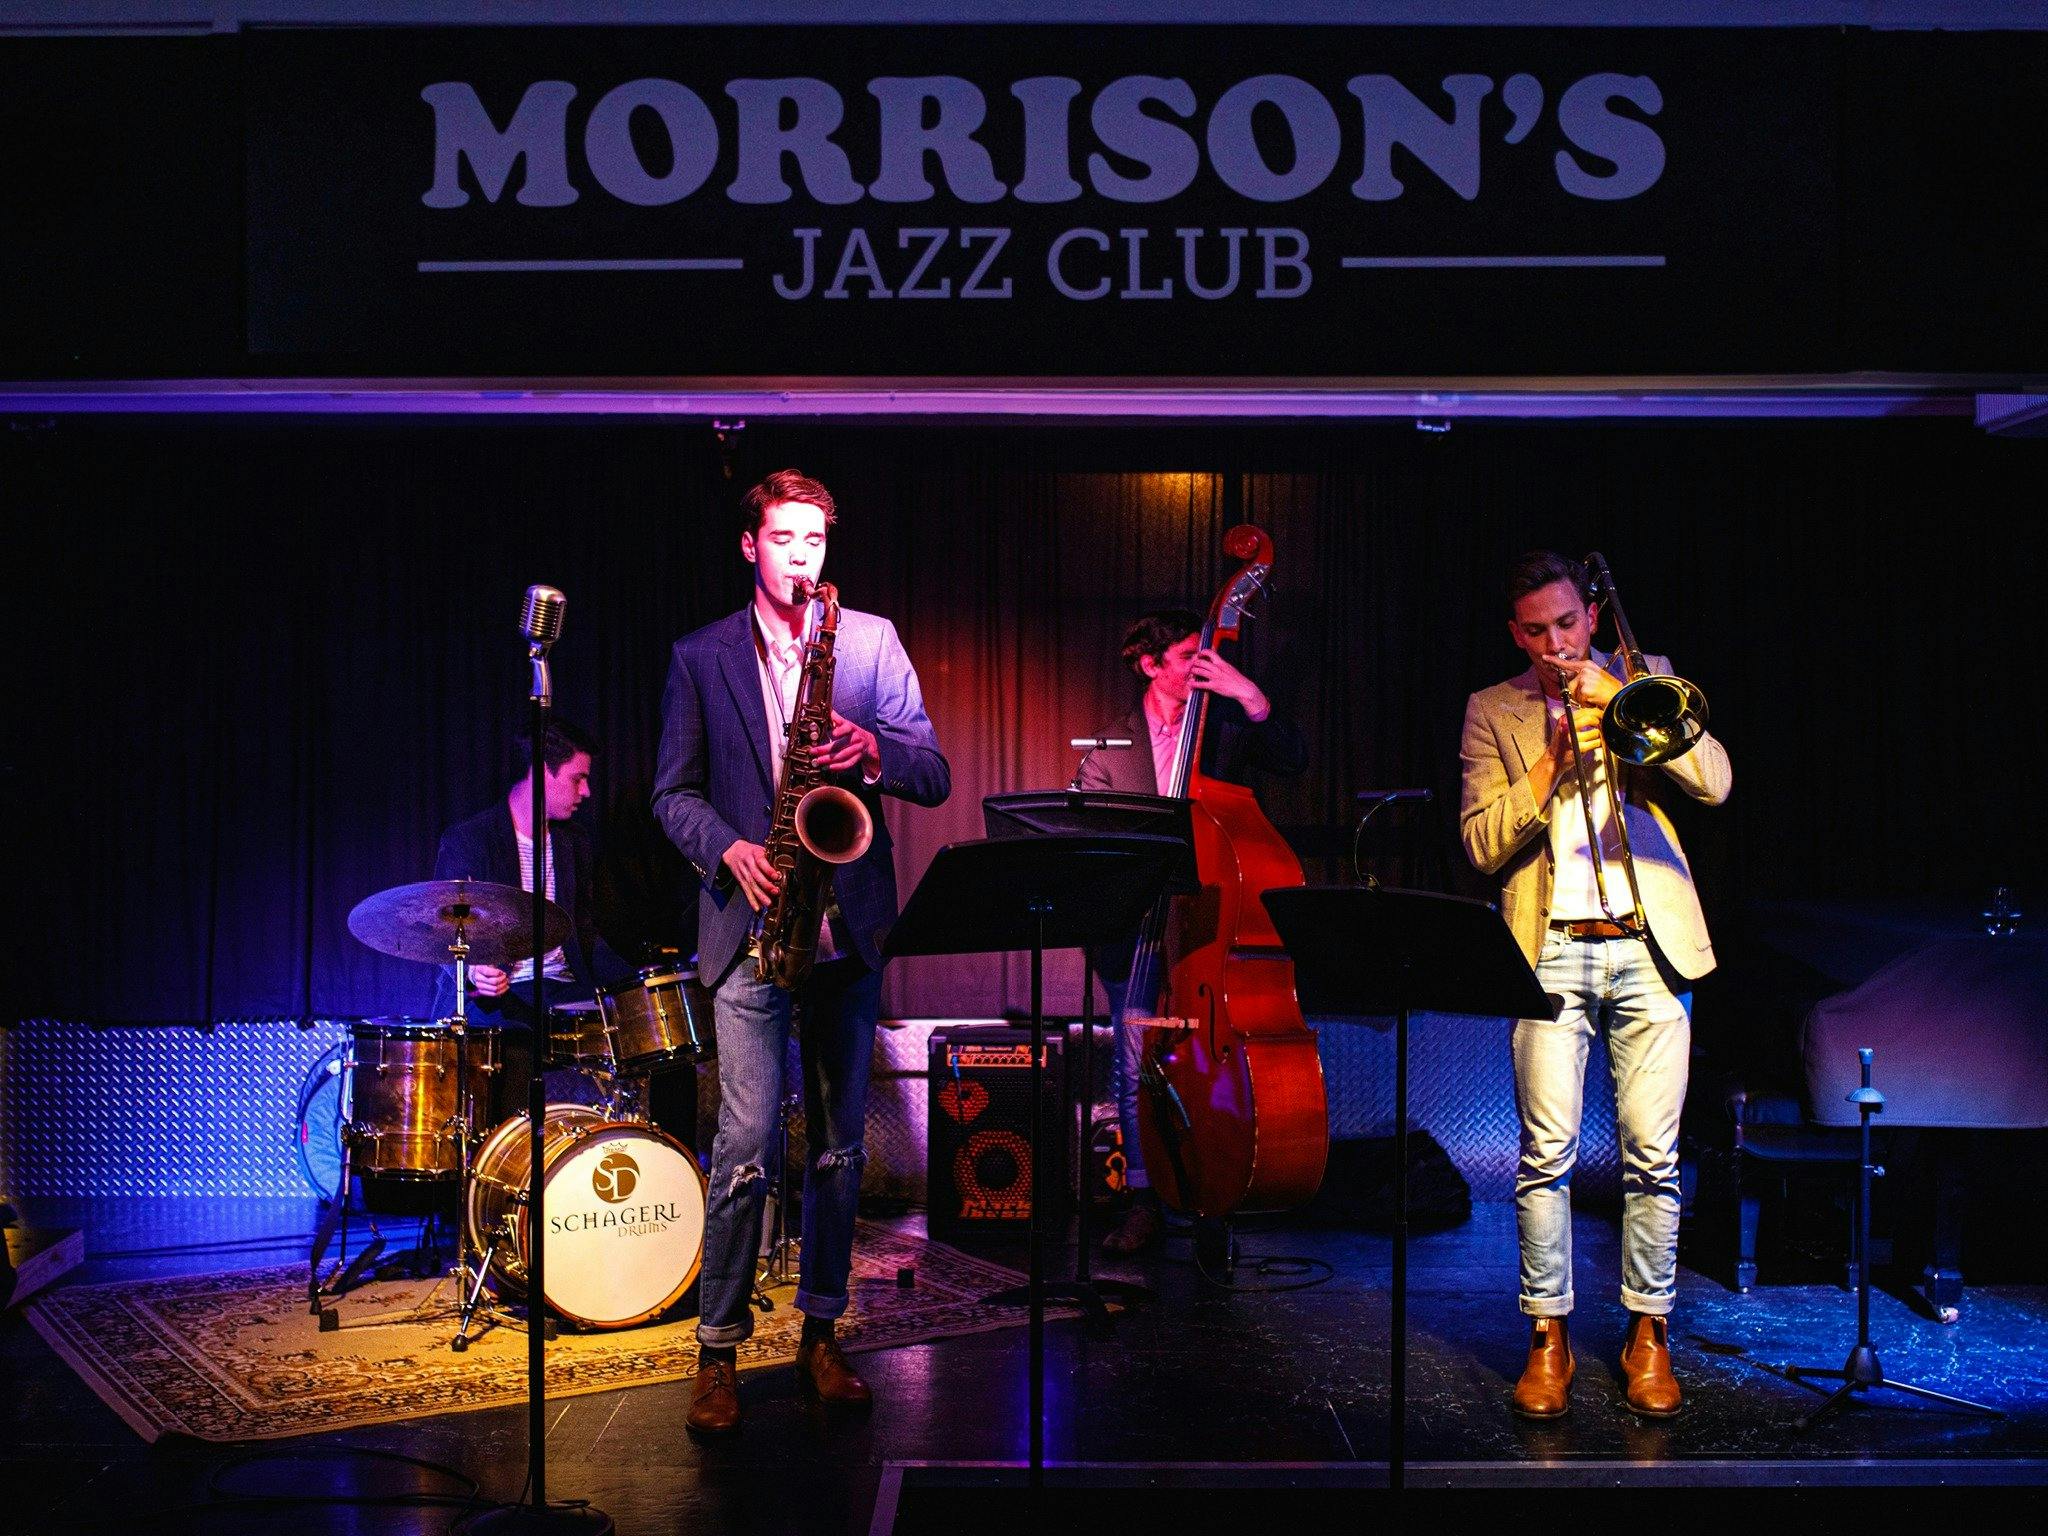 Morrison's Jazz Club